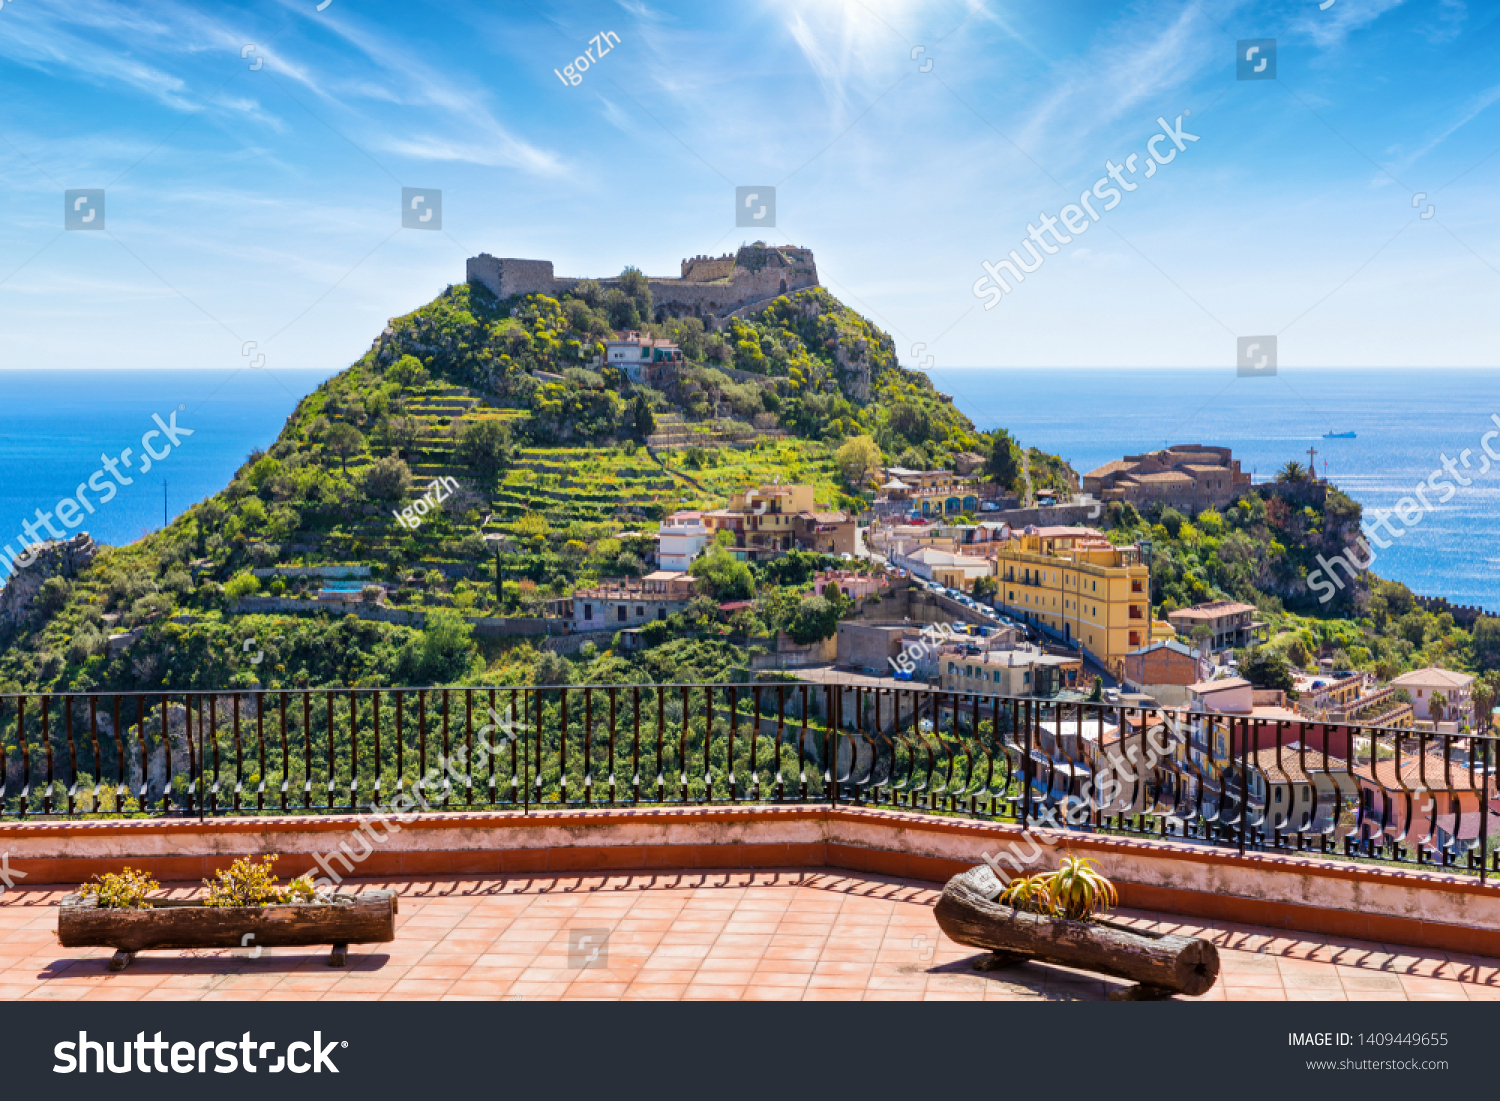 Taormina Castle, known as Castello di Taormina or Castello Saraceno, and little church of Madonna della Rocca located on green mount in Messina province on Sicily island in Italy.   #1409449655